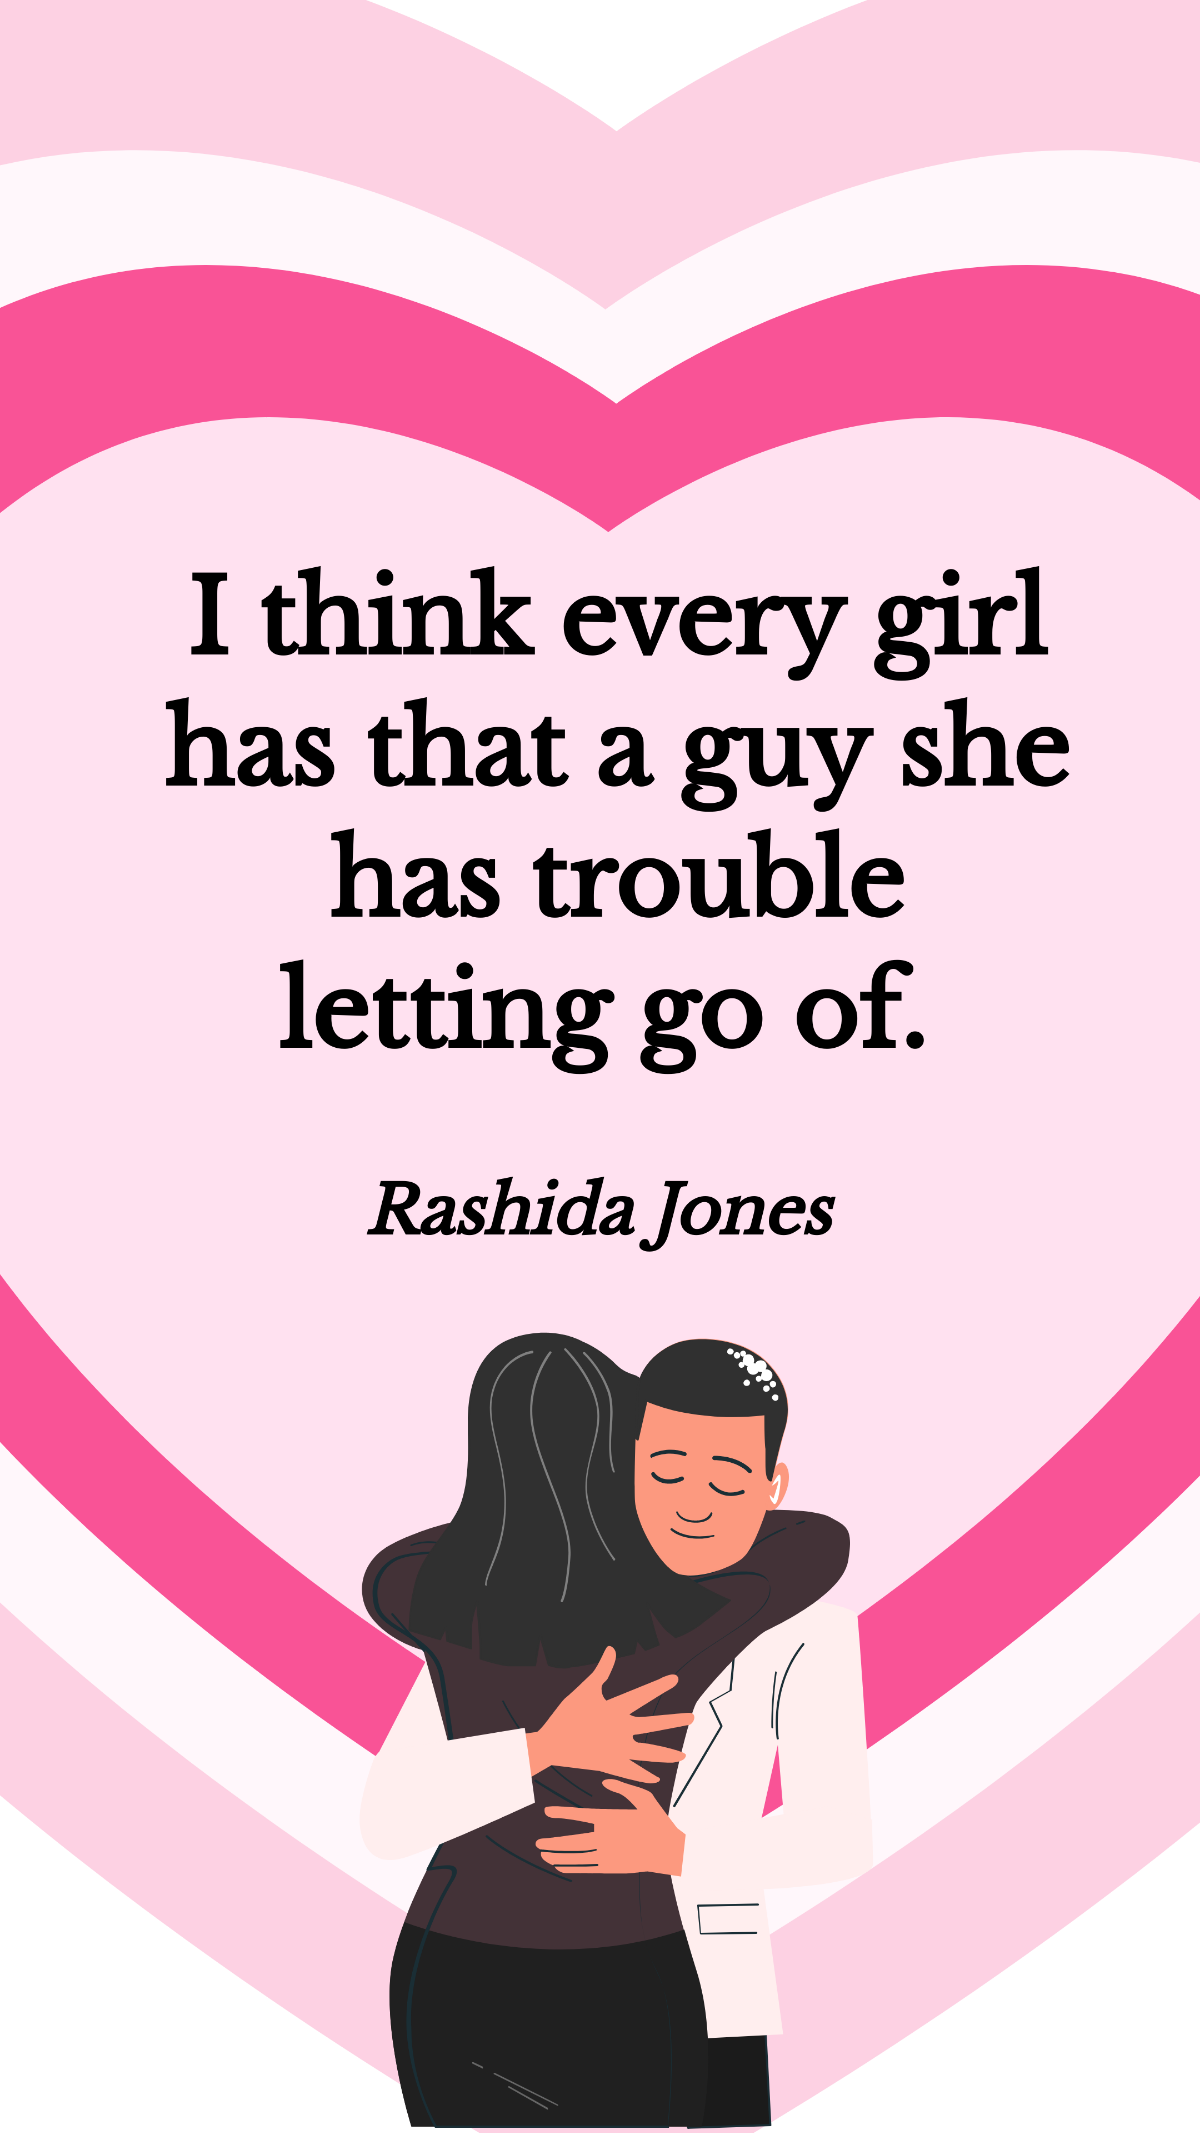 Rashida Jones - I think every girl has that a guy she has trouble letting go of. Template